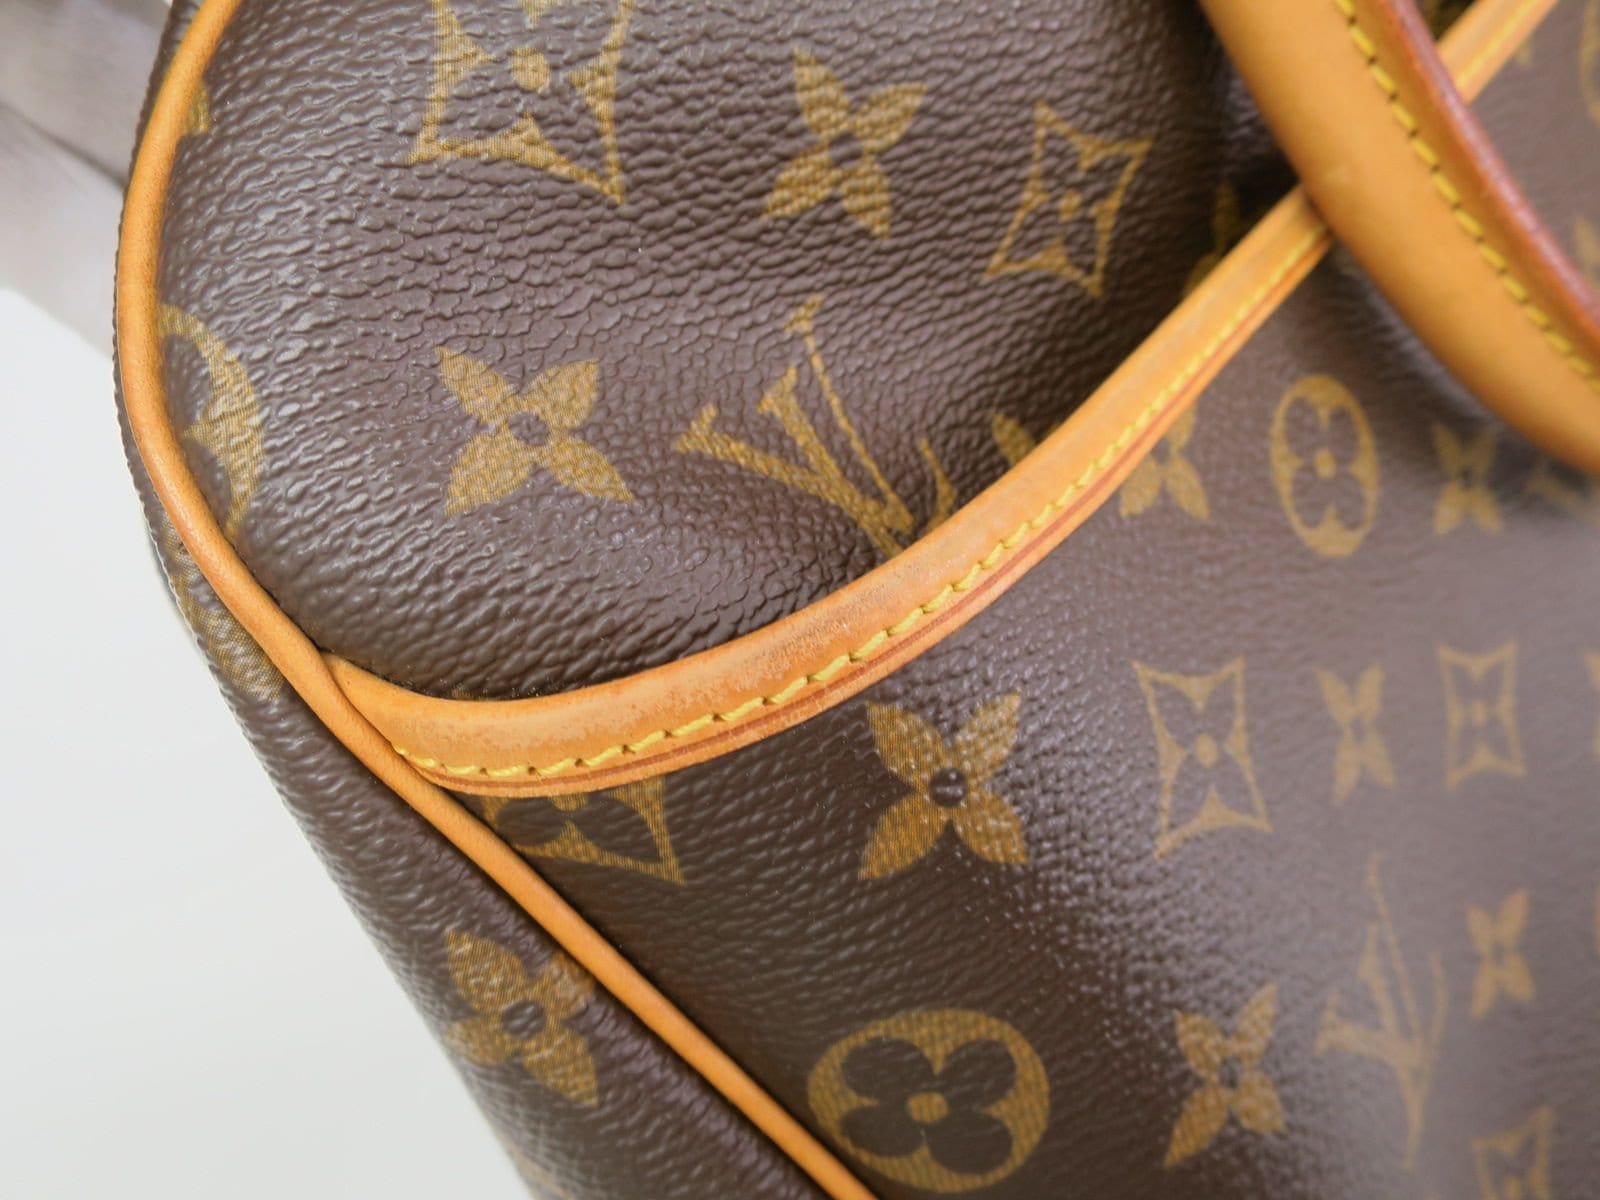 Louis Vuitton Bowling Vanity Bag Review 